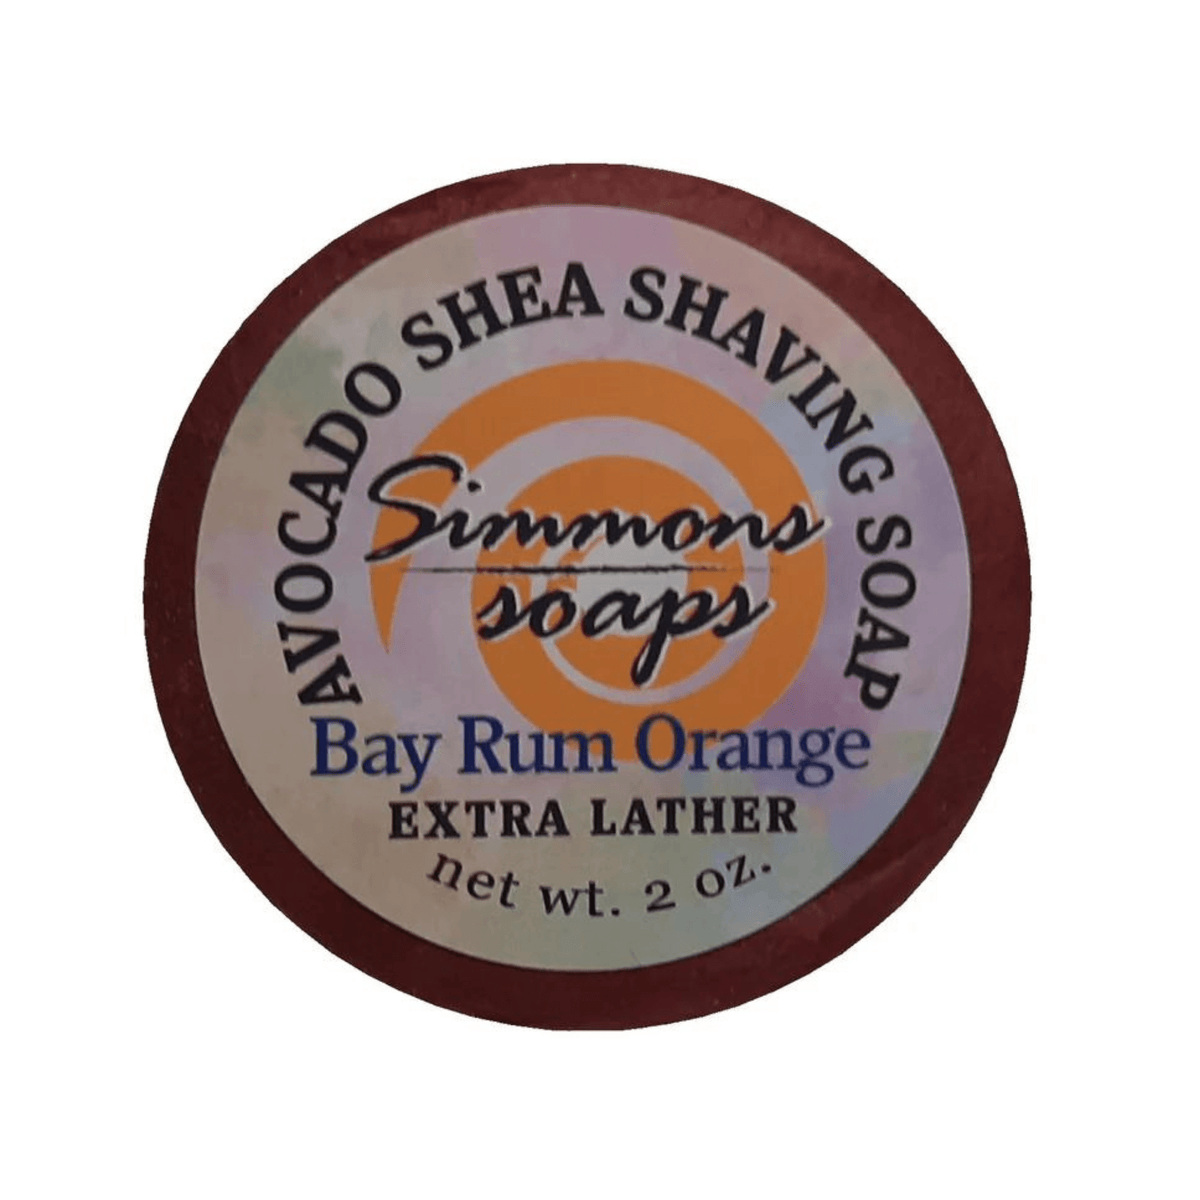 Primary Image of Bay Rum Orange Shaving Soap